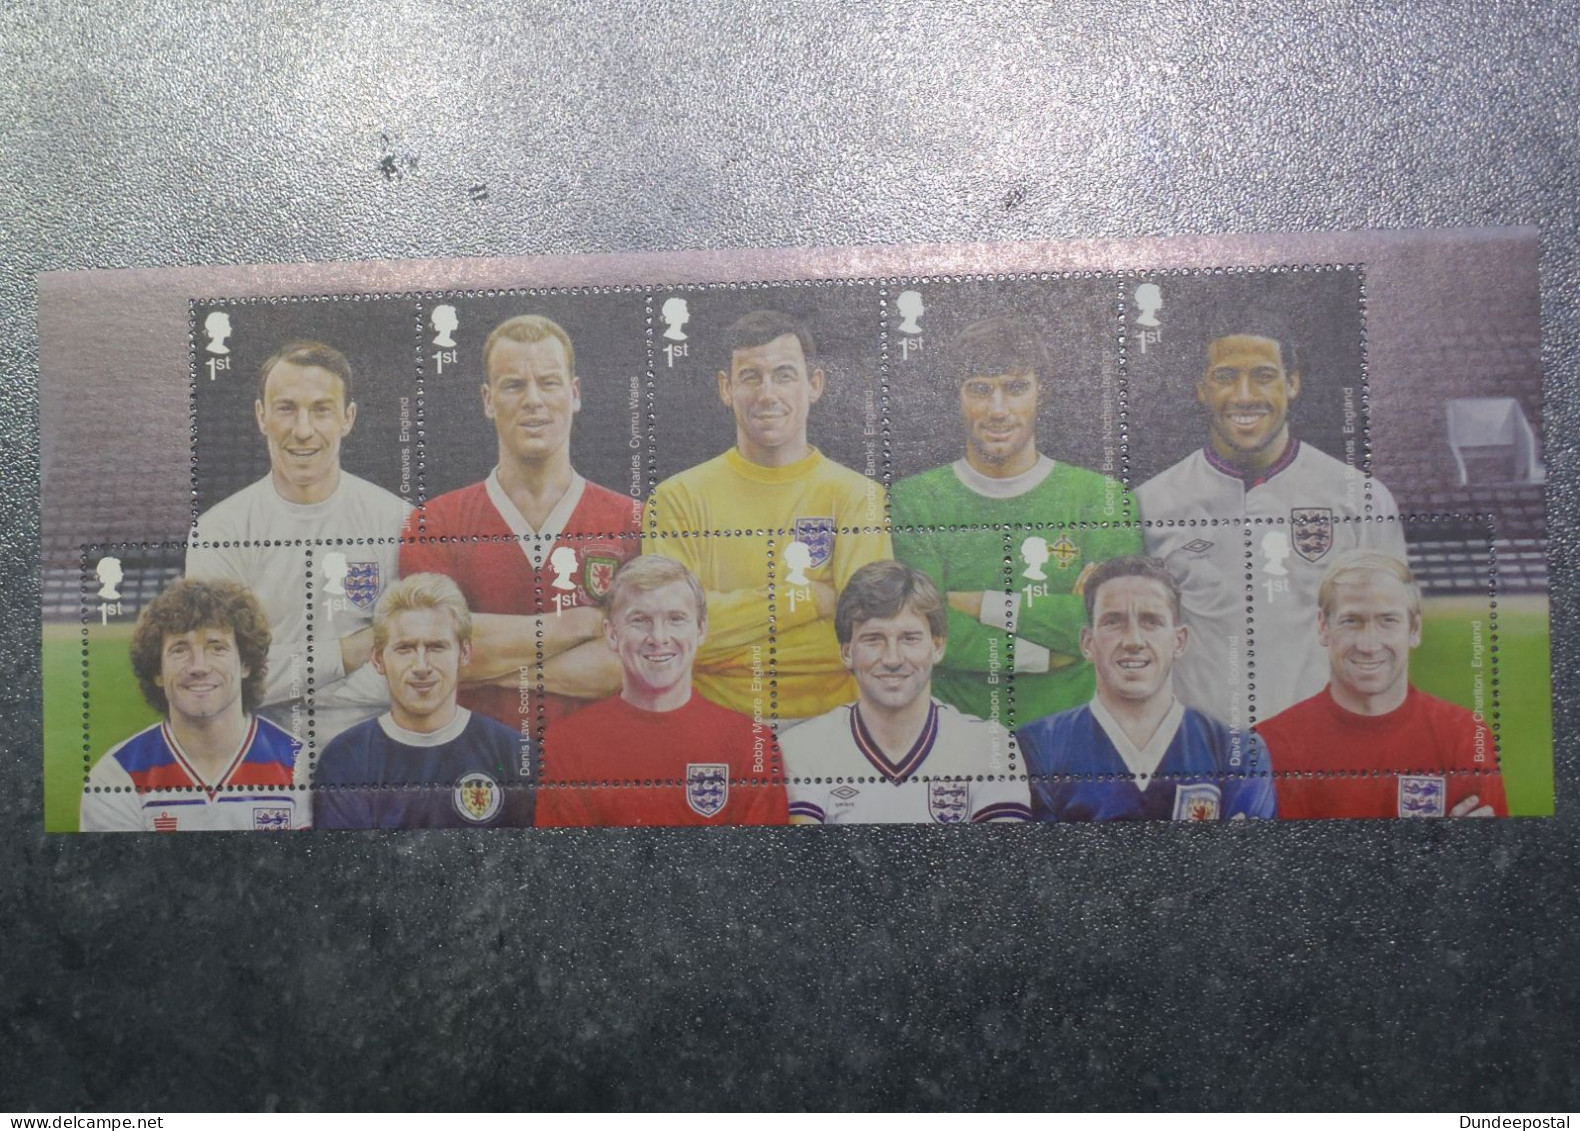 GB  STAMPS Mini Sheet Football Hero's 2013  MNH  ~~L@@K~~ - Unused Stamps